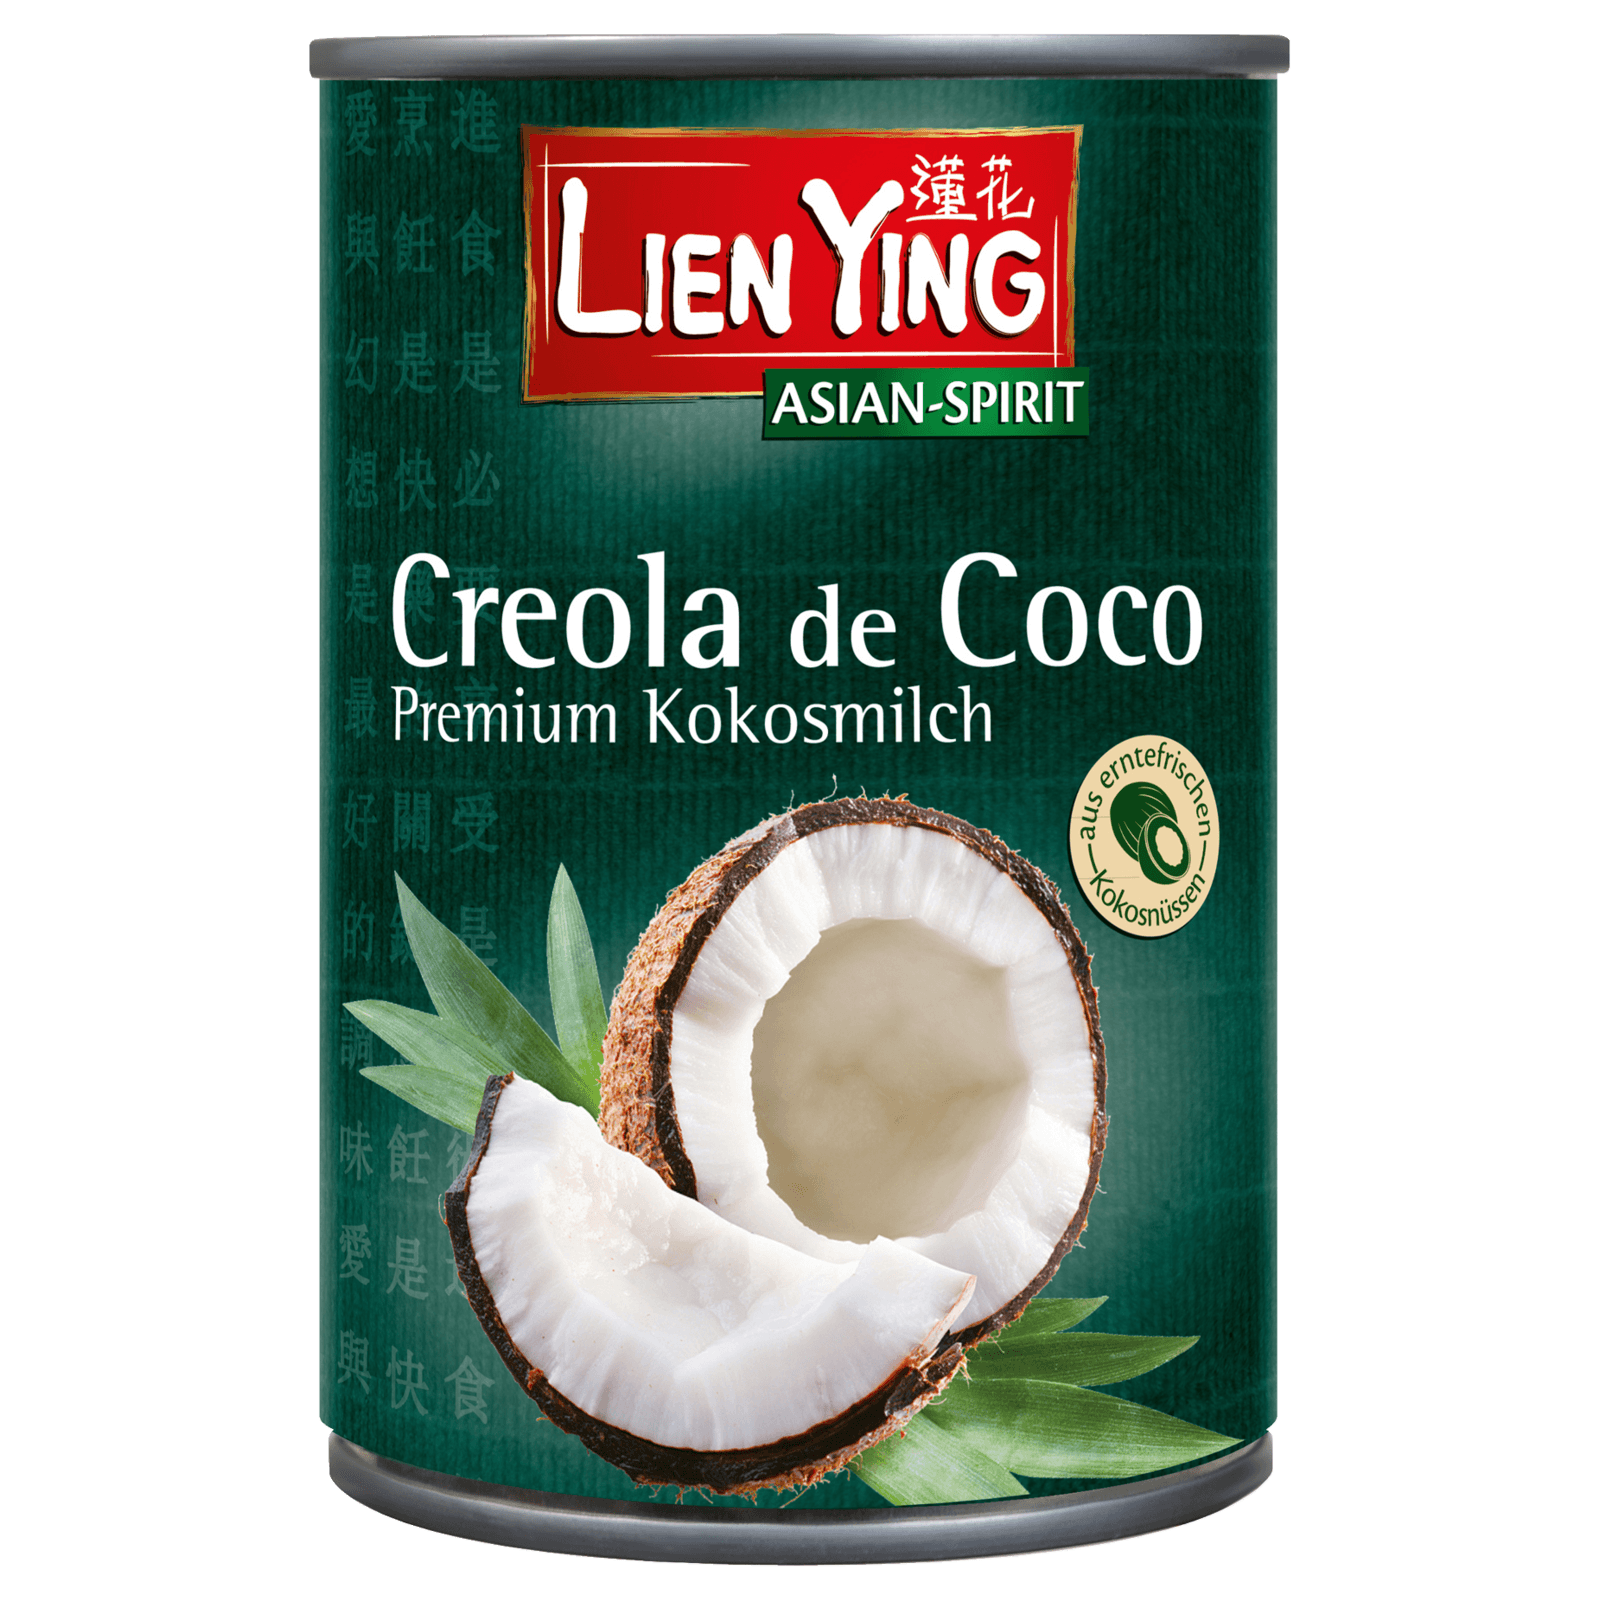 Lien Ying Creola de Coco 400ml  für 2.99 EUR